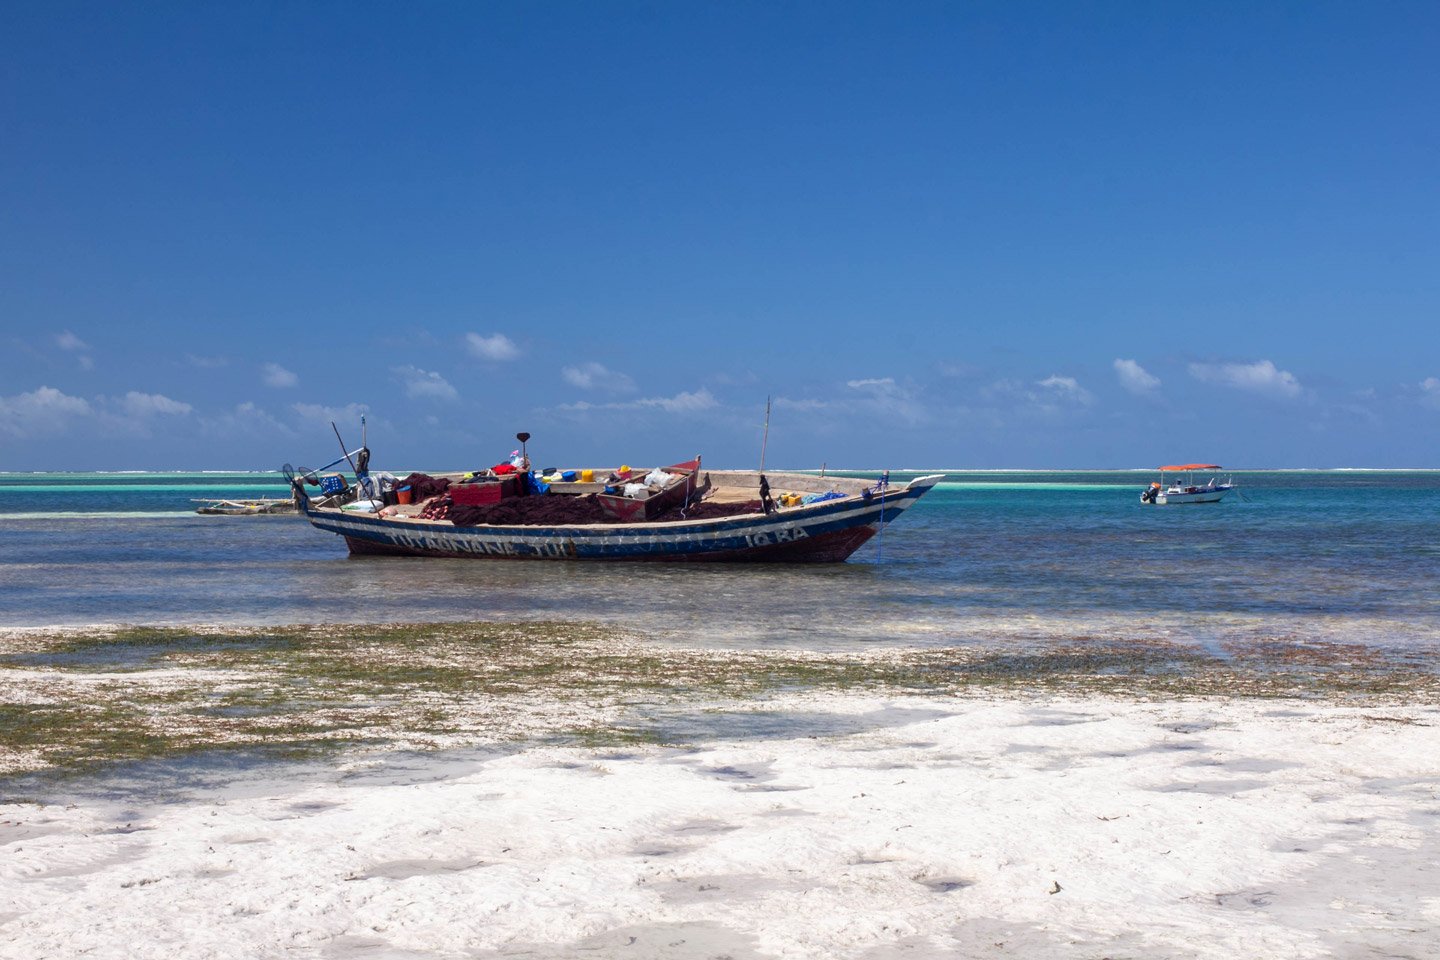 Botecito en playa de Zanzibar